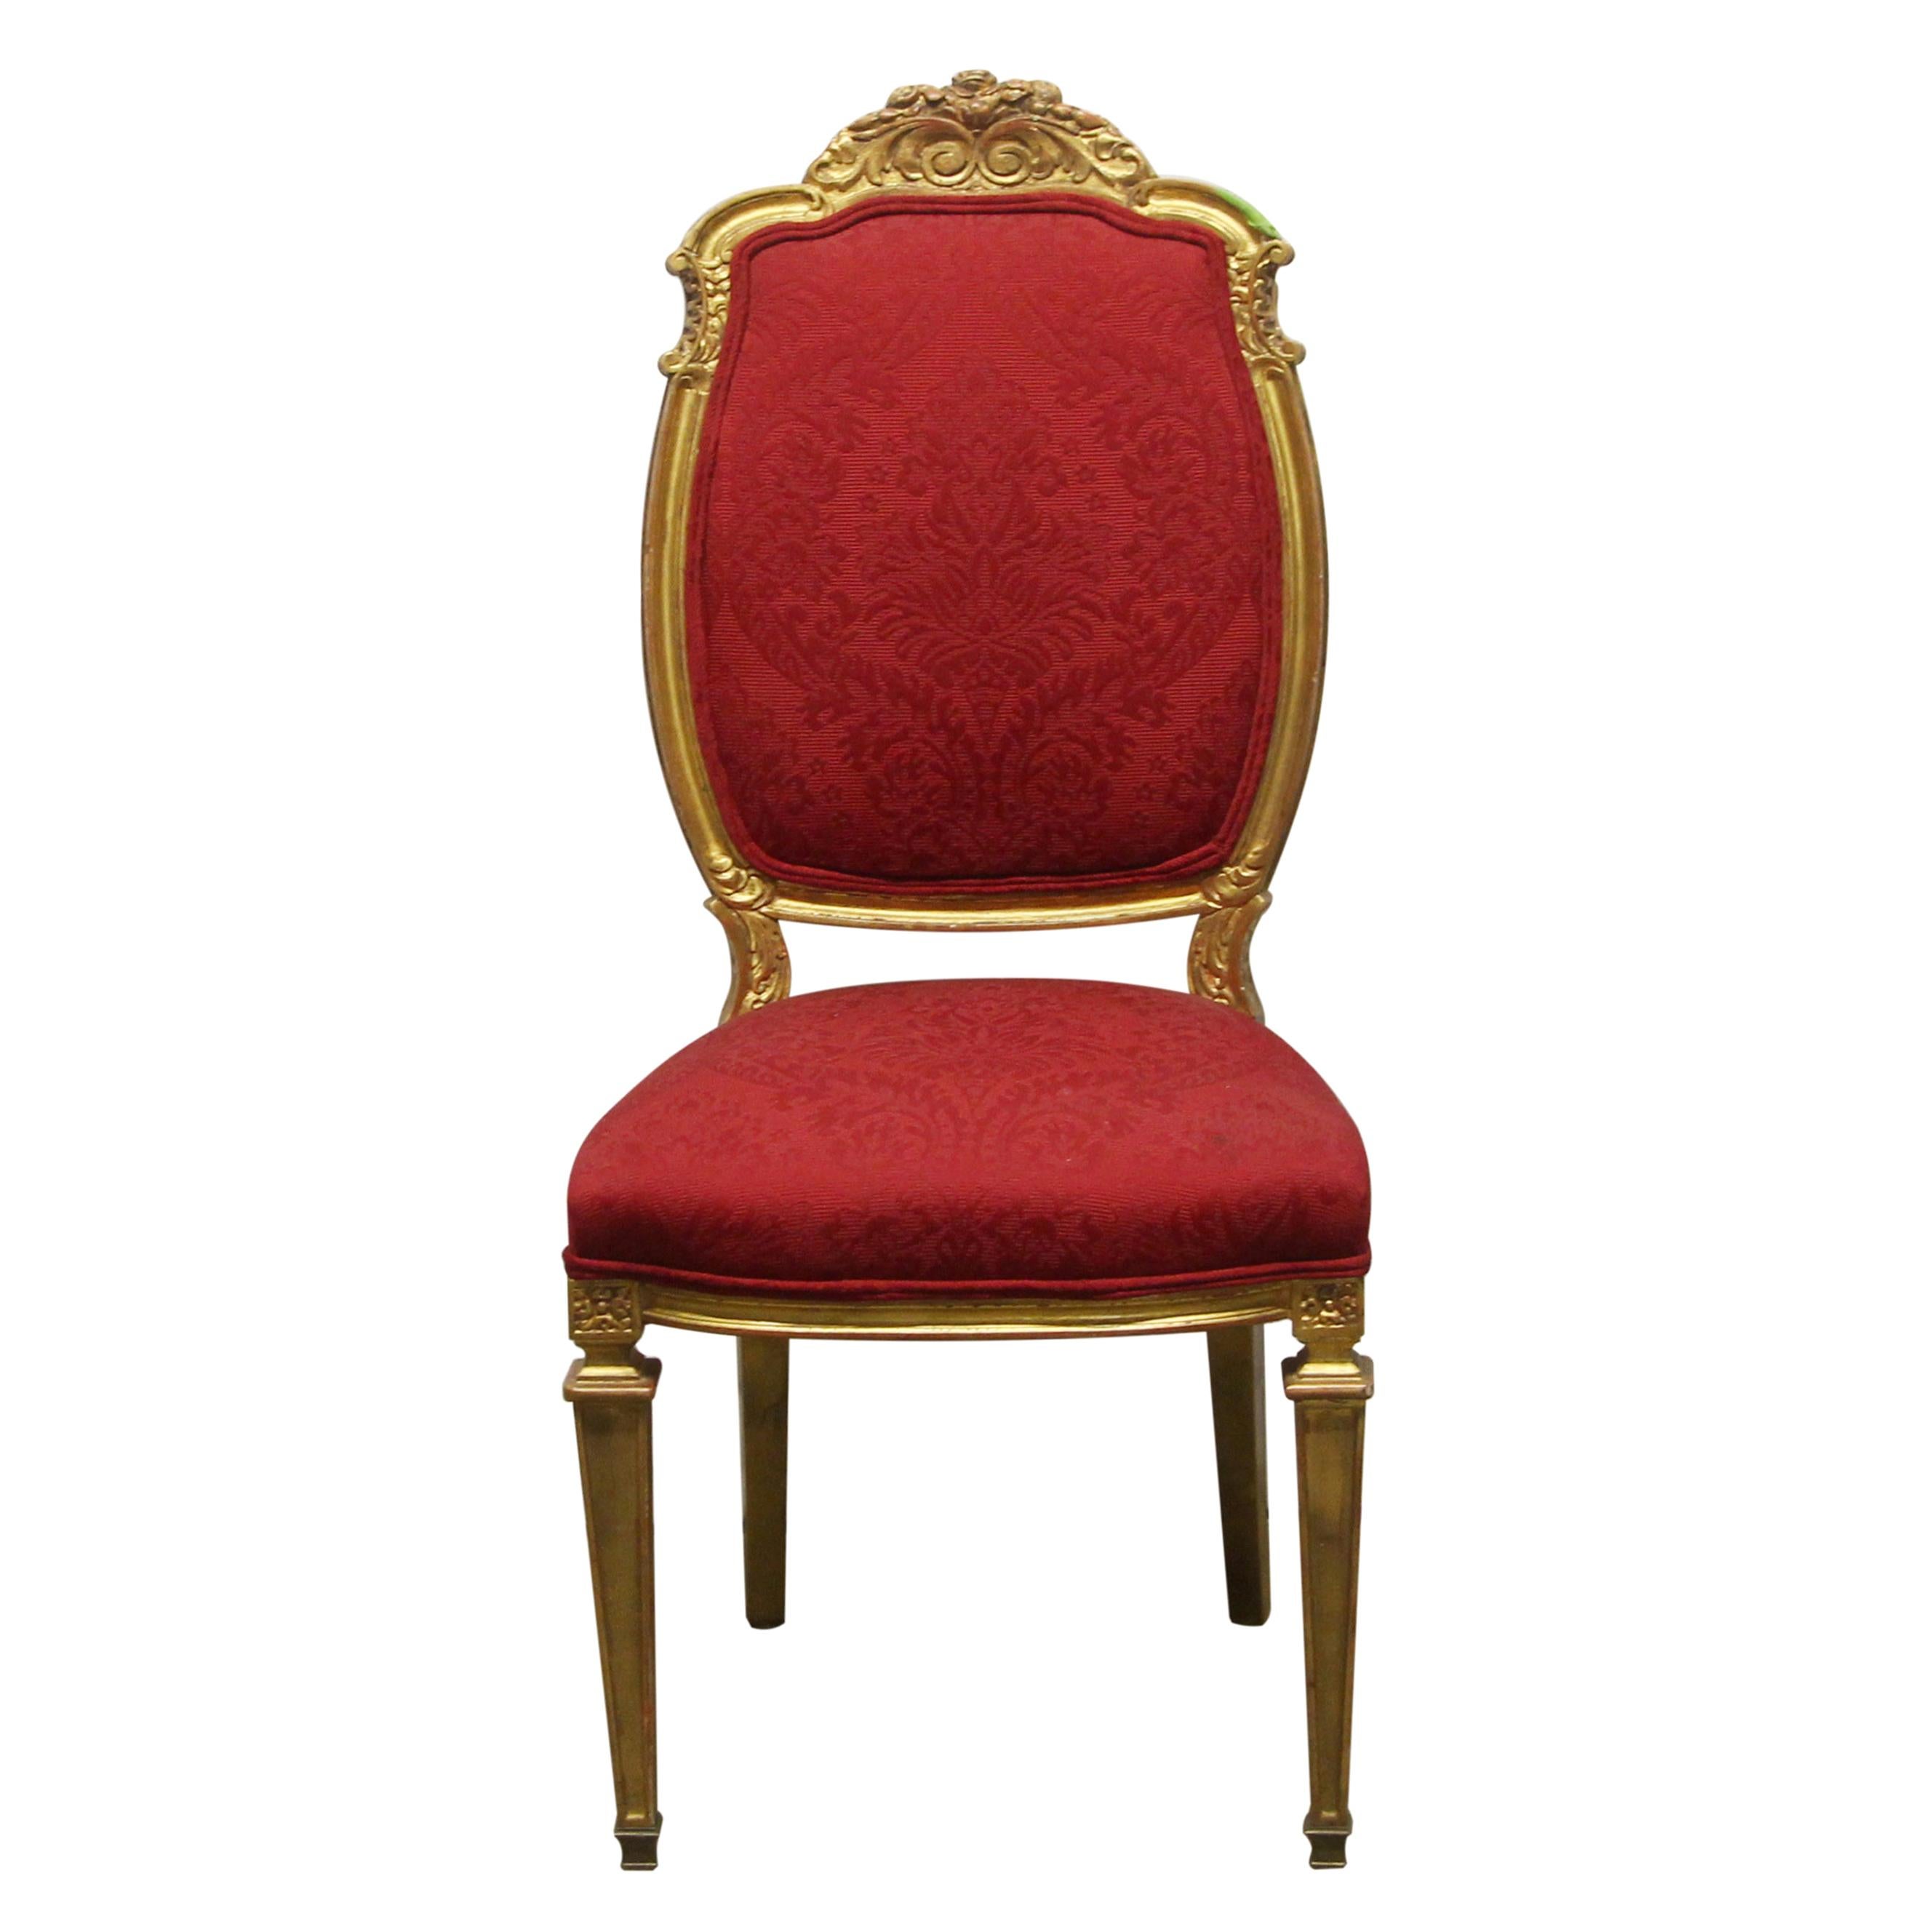 1920er Jahre Französisch Stuhl vergoldet geschnitzt Holzrahmen rot geblümt Polsterung